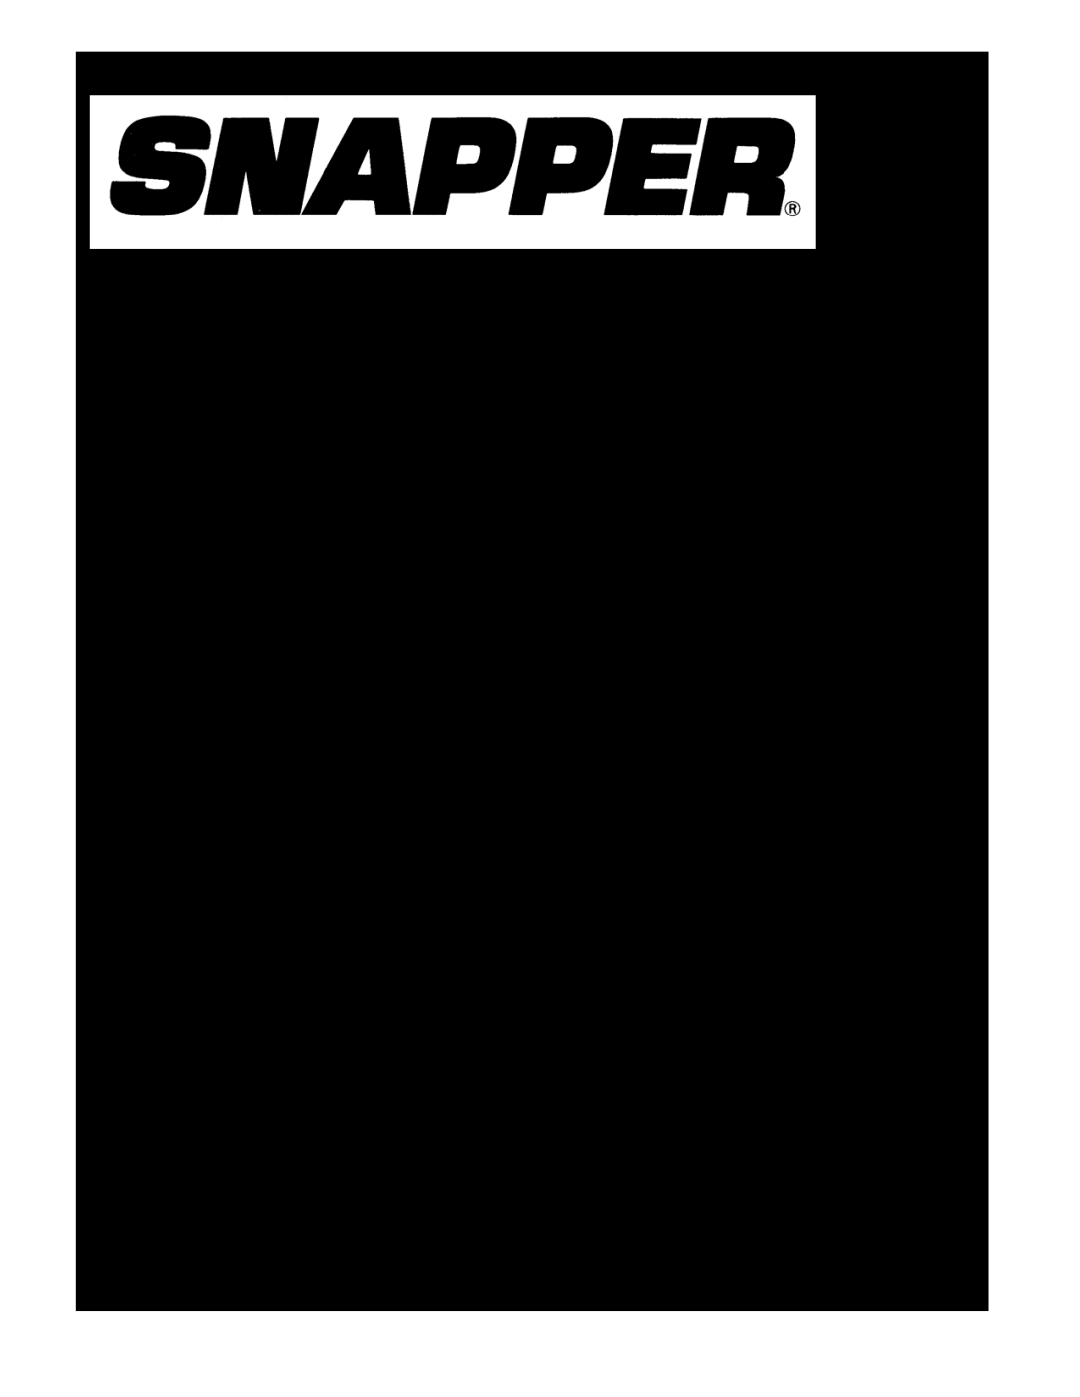 Snapper 84871 Reproduction, 28 & 33 Hi-Vac REAR ENGINE RIDER SERIES, Parts Manual for, 7006279, Revision B, 12/6/2010 